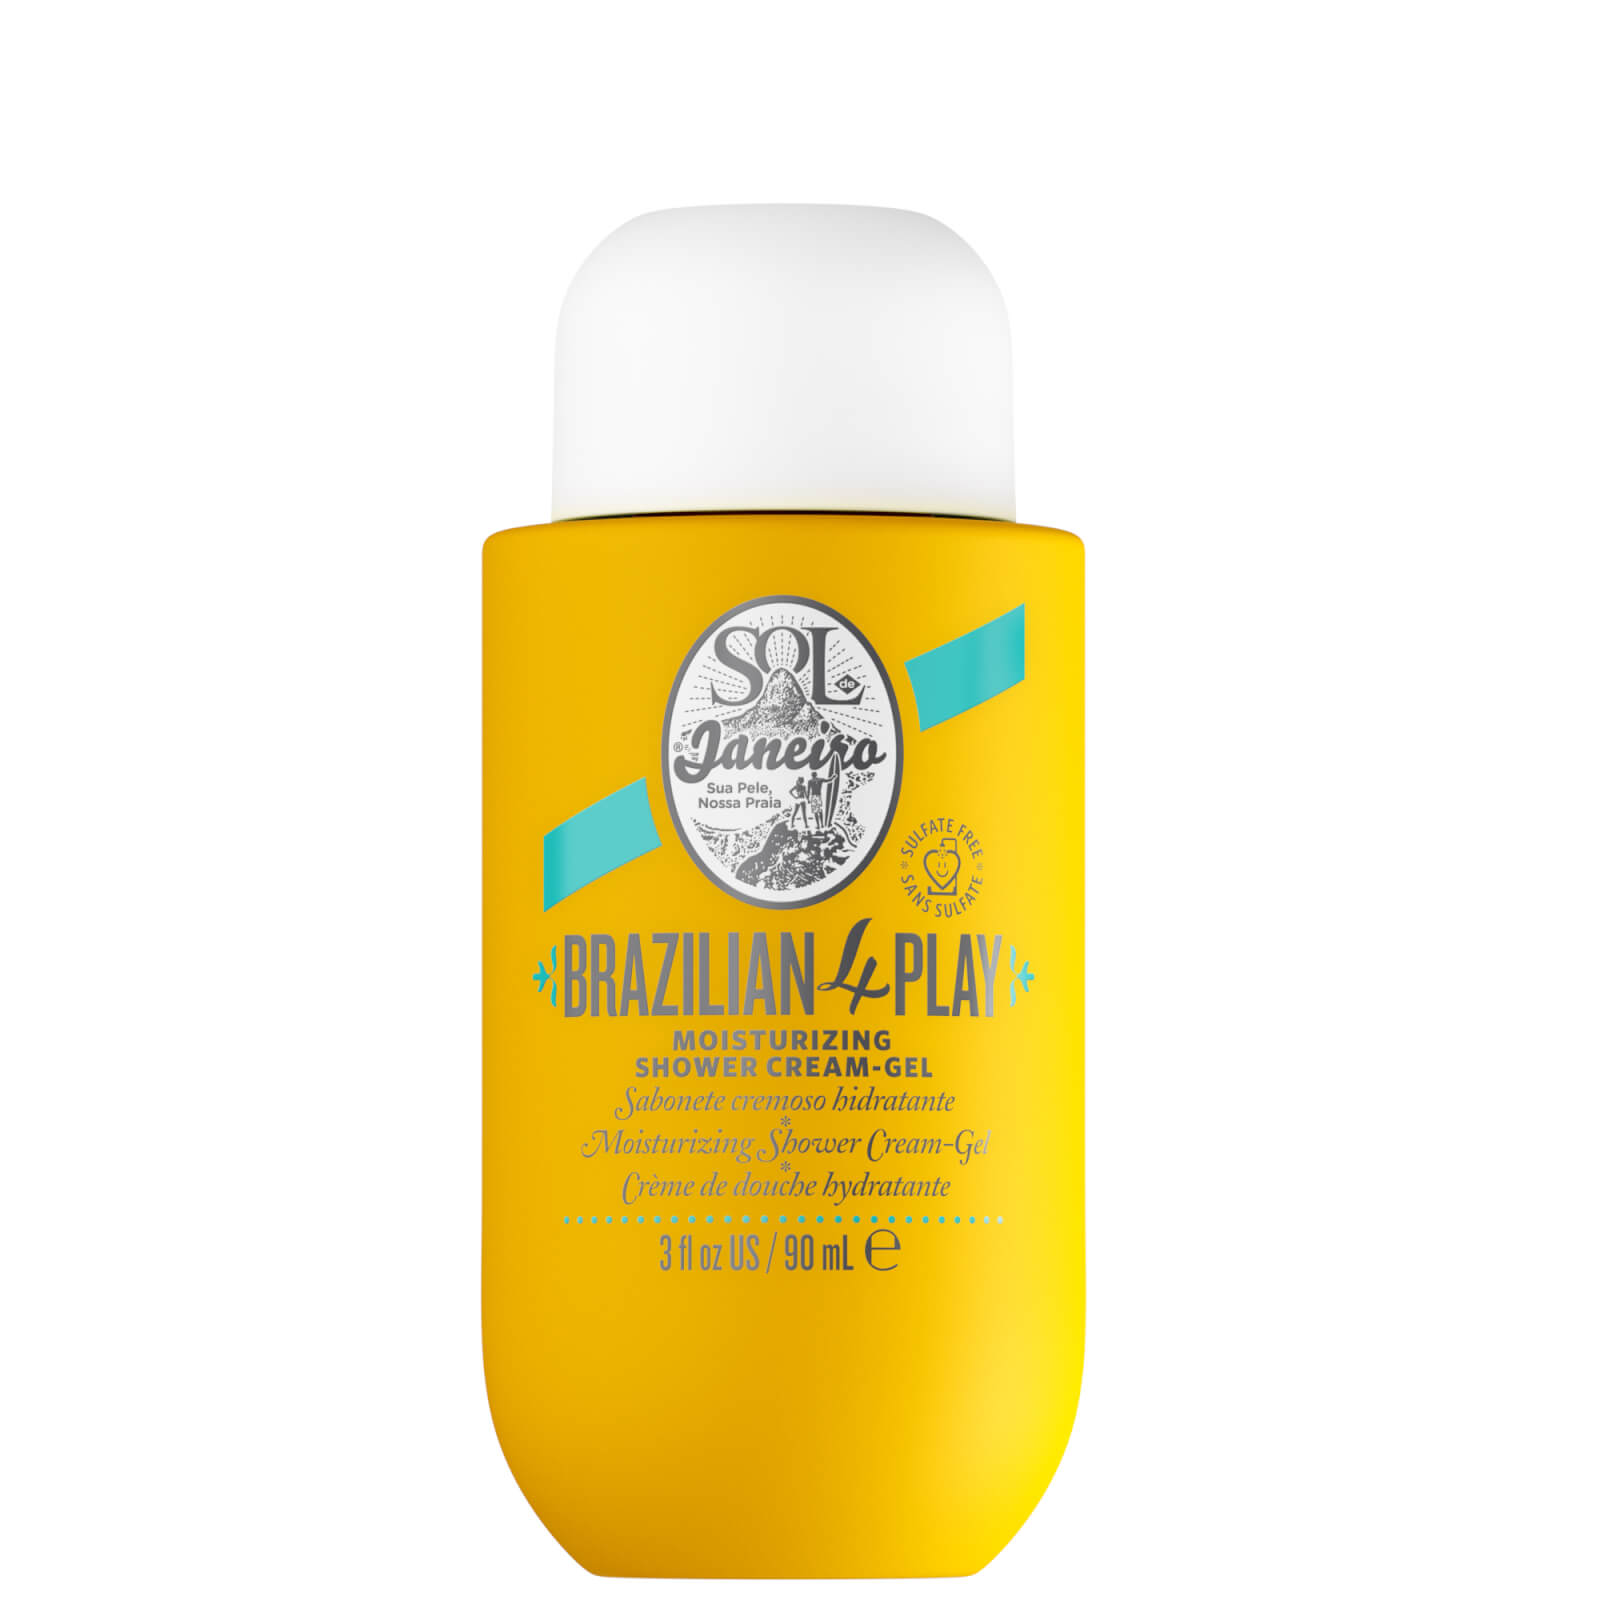 Sol De Janeiro Brazilian 4 Play Moisturizing Shower Cream-gel 90ml In Yellow